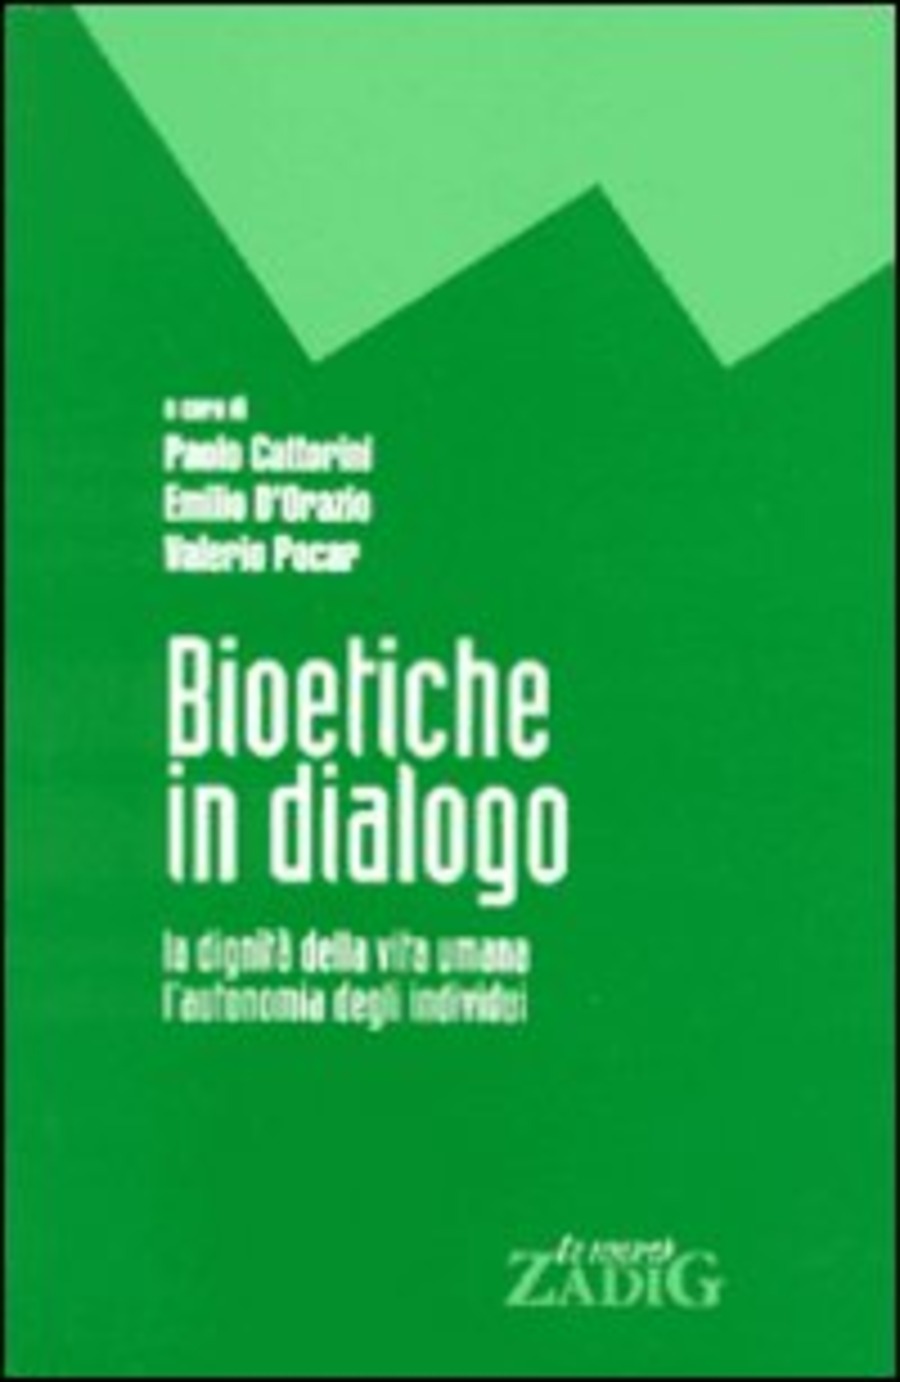 Bioetiche in dialogo